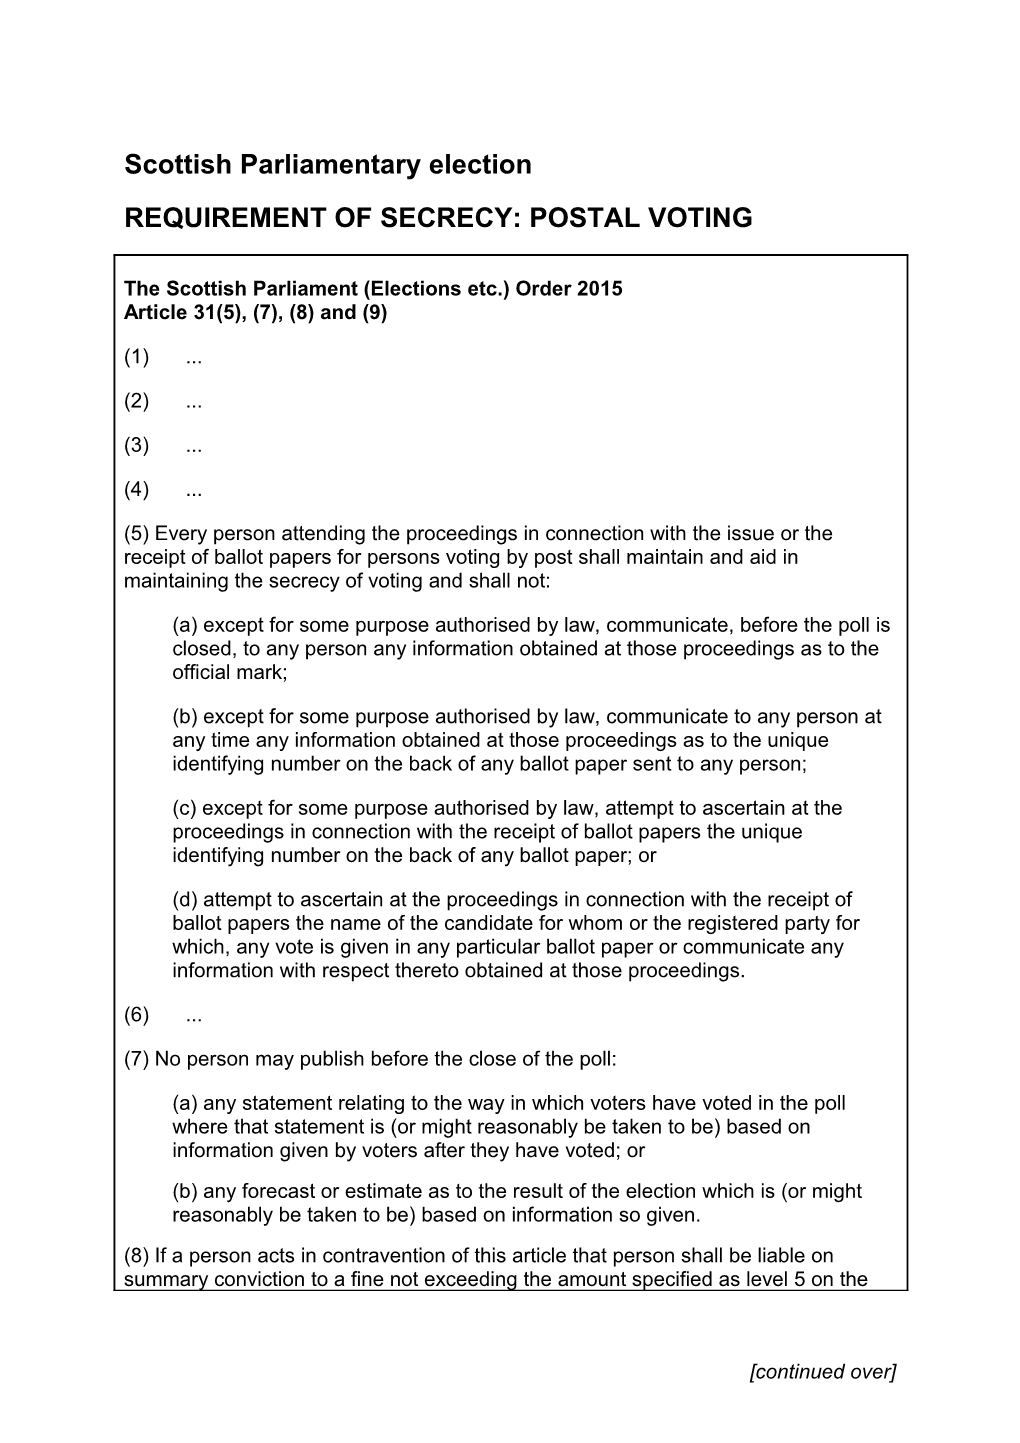 SP Secrecy - Postal Voting